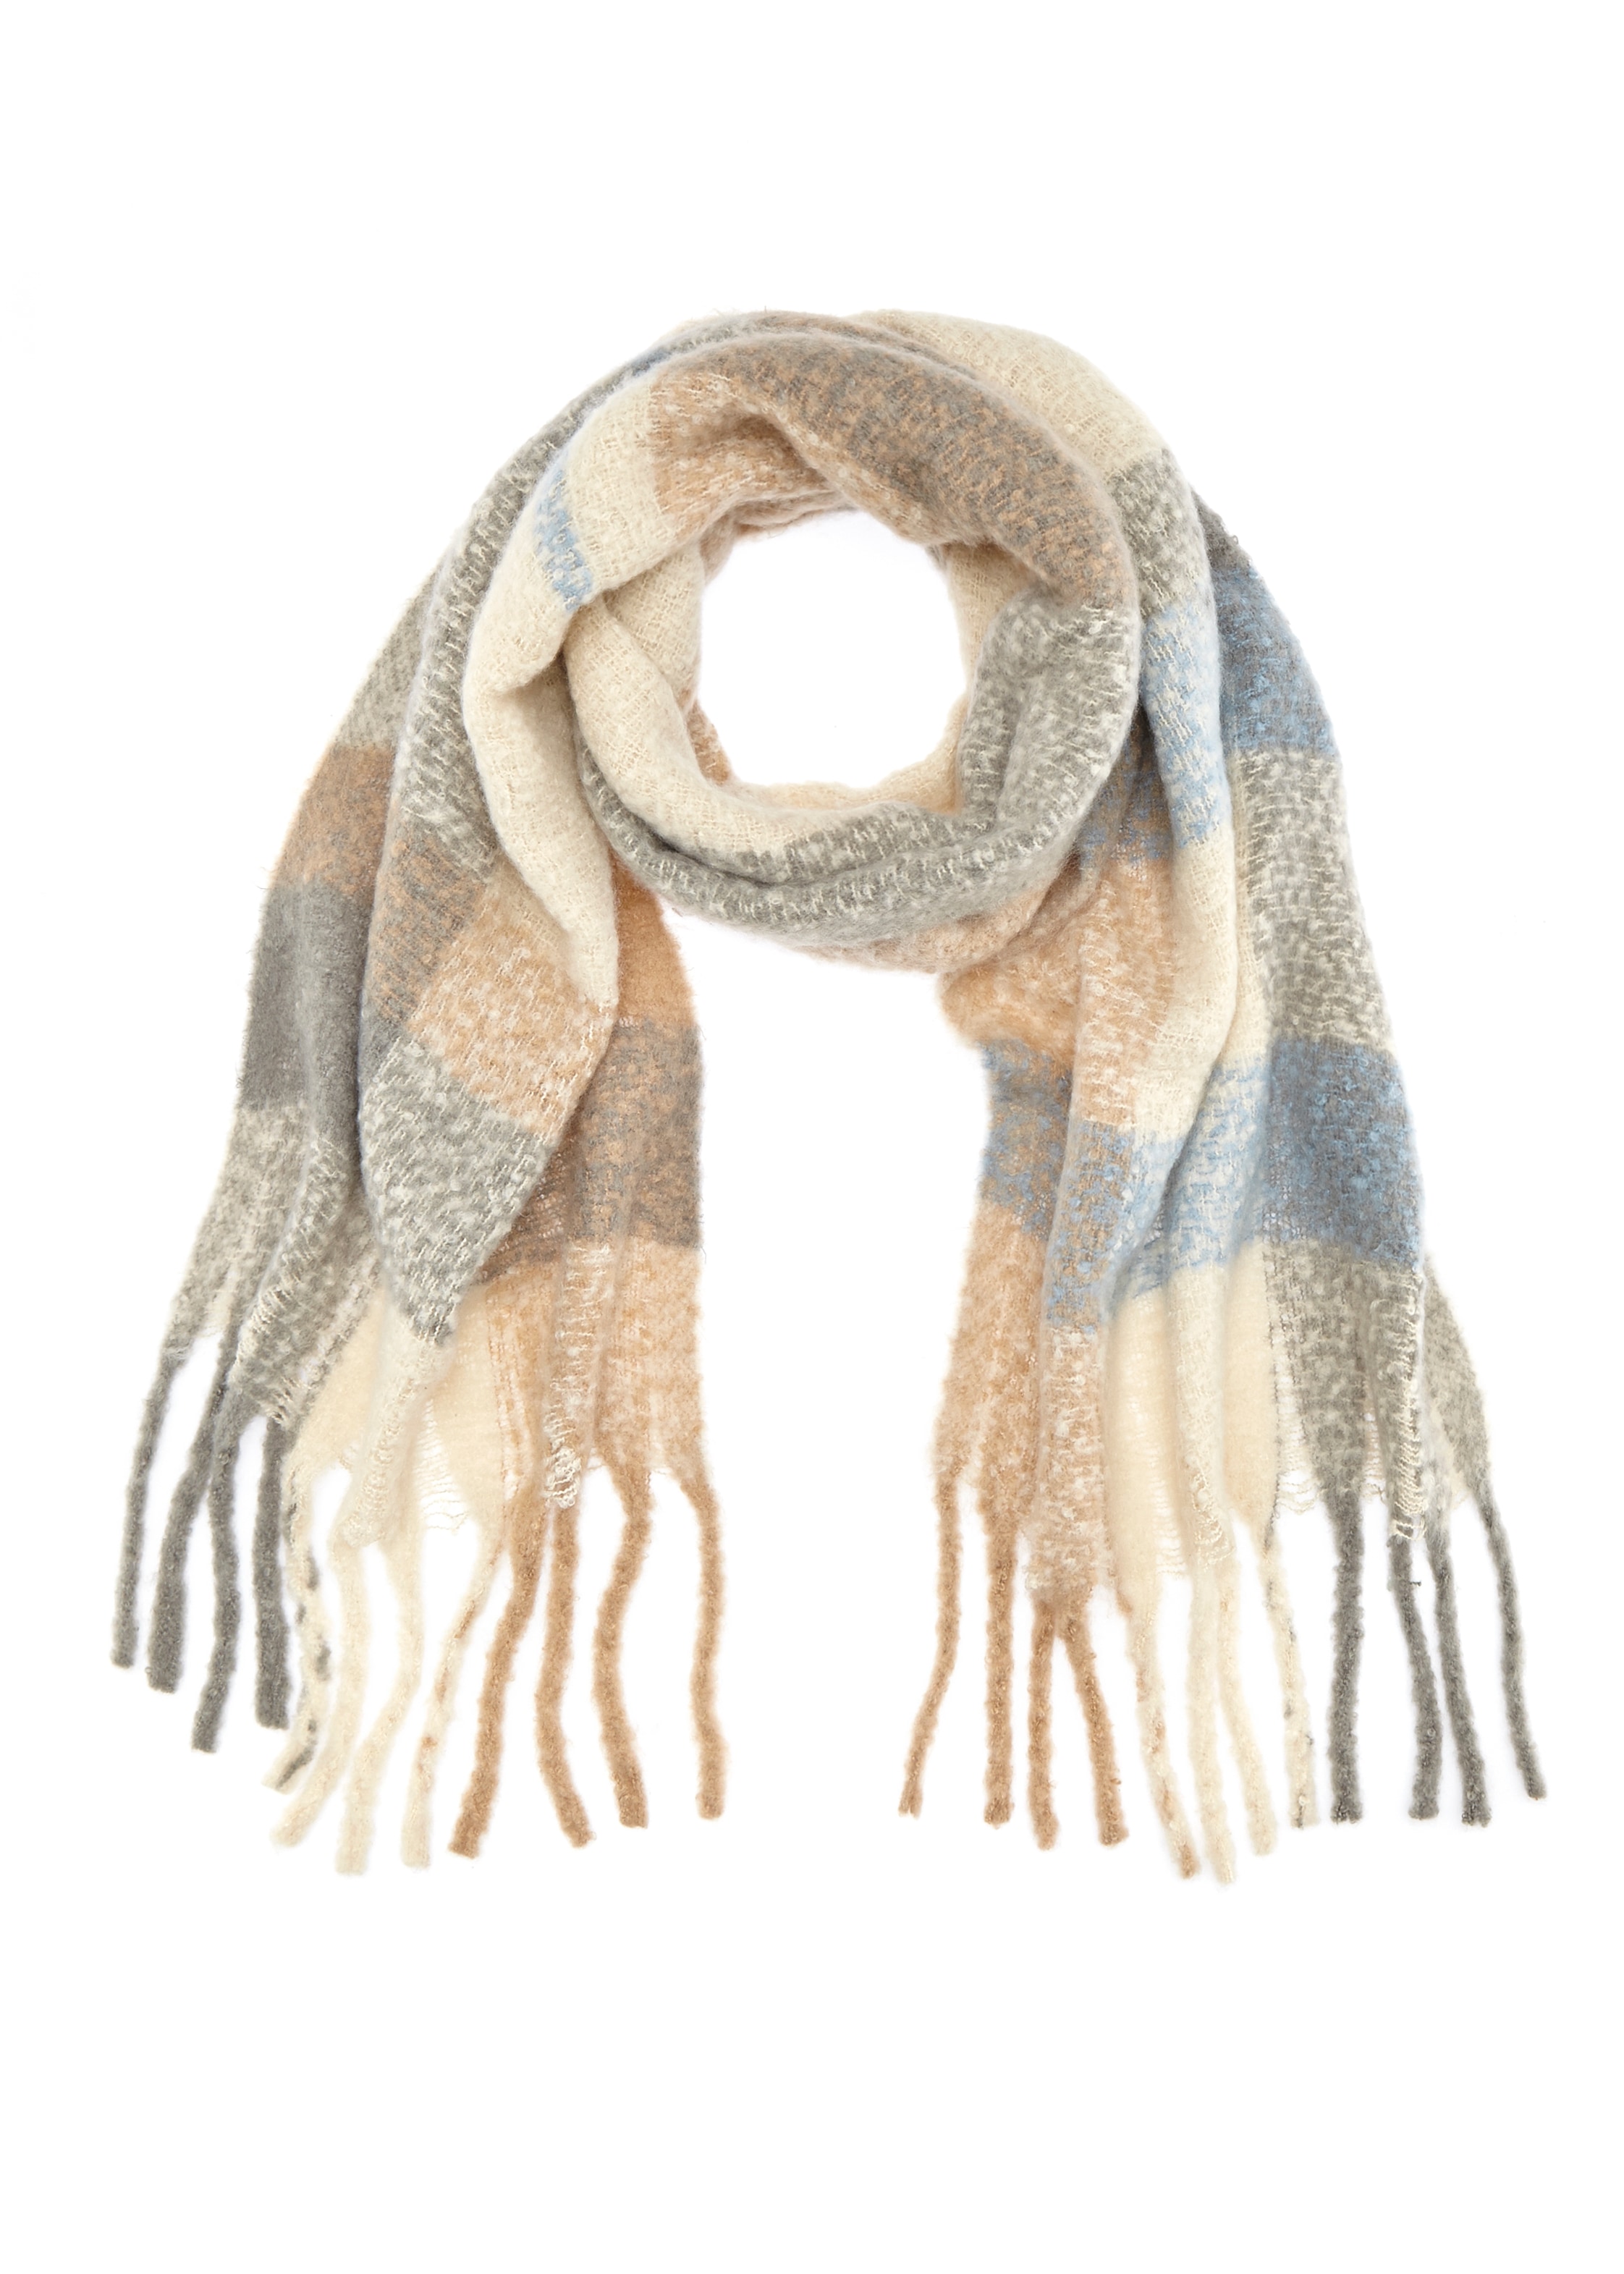 & | online LASCANA Online Shop kaufen Tücher Schals, Loops